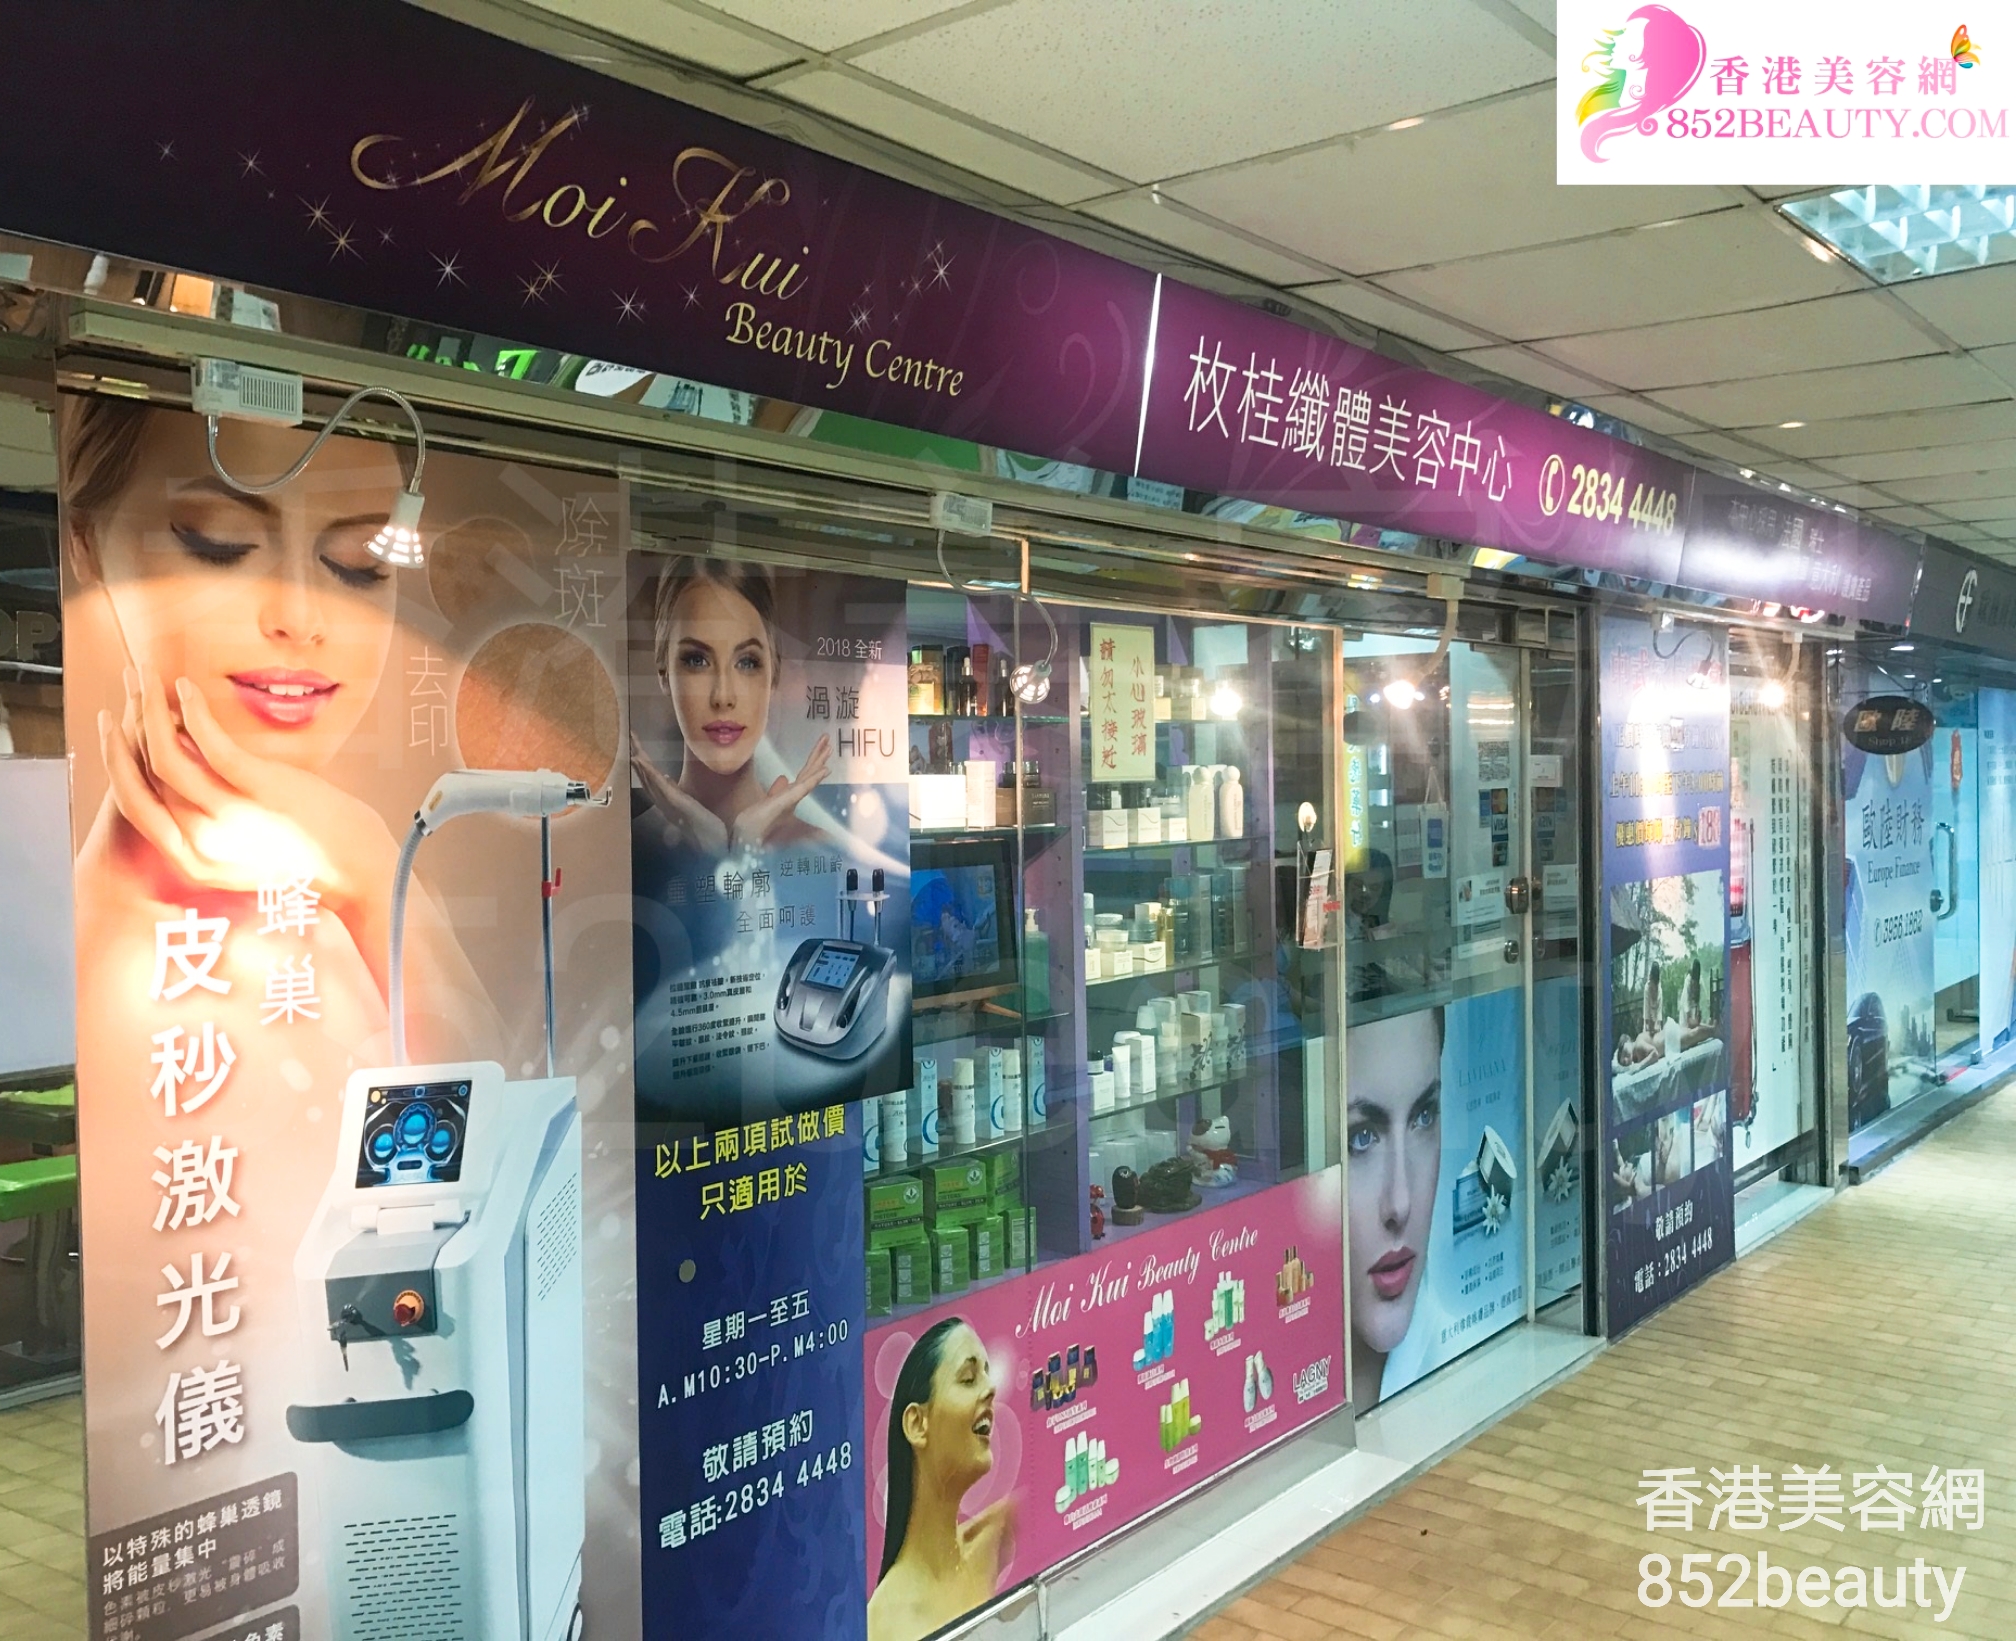 Facial Care: 枚桂纖體美容中心 Moi Kui Beauty Centre